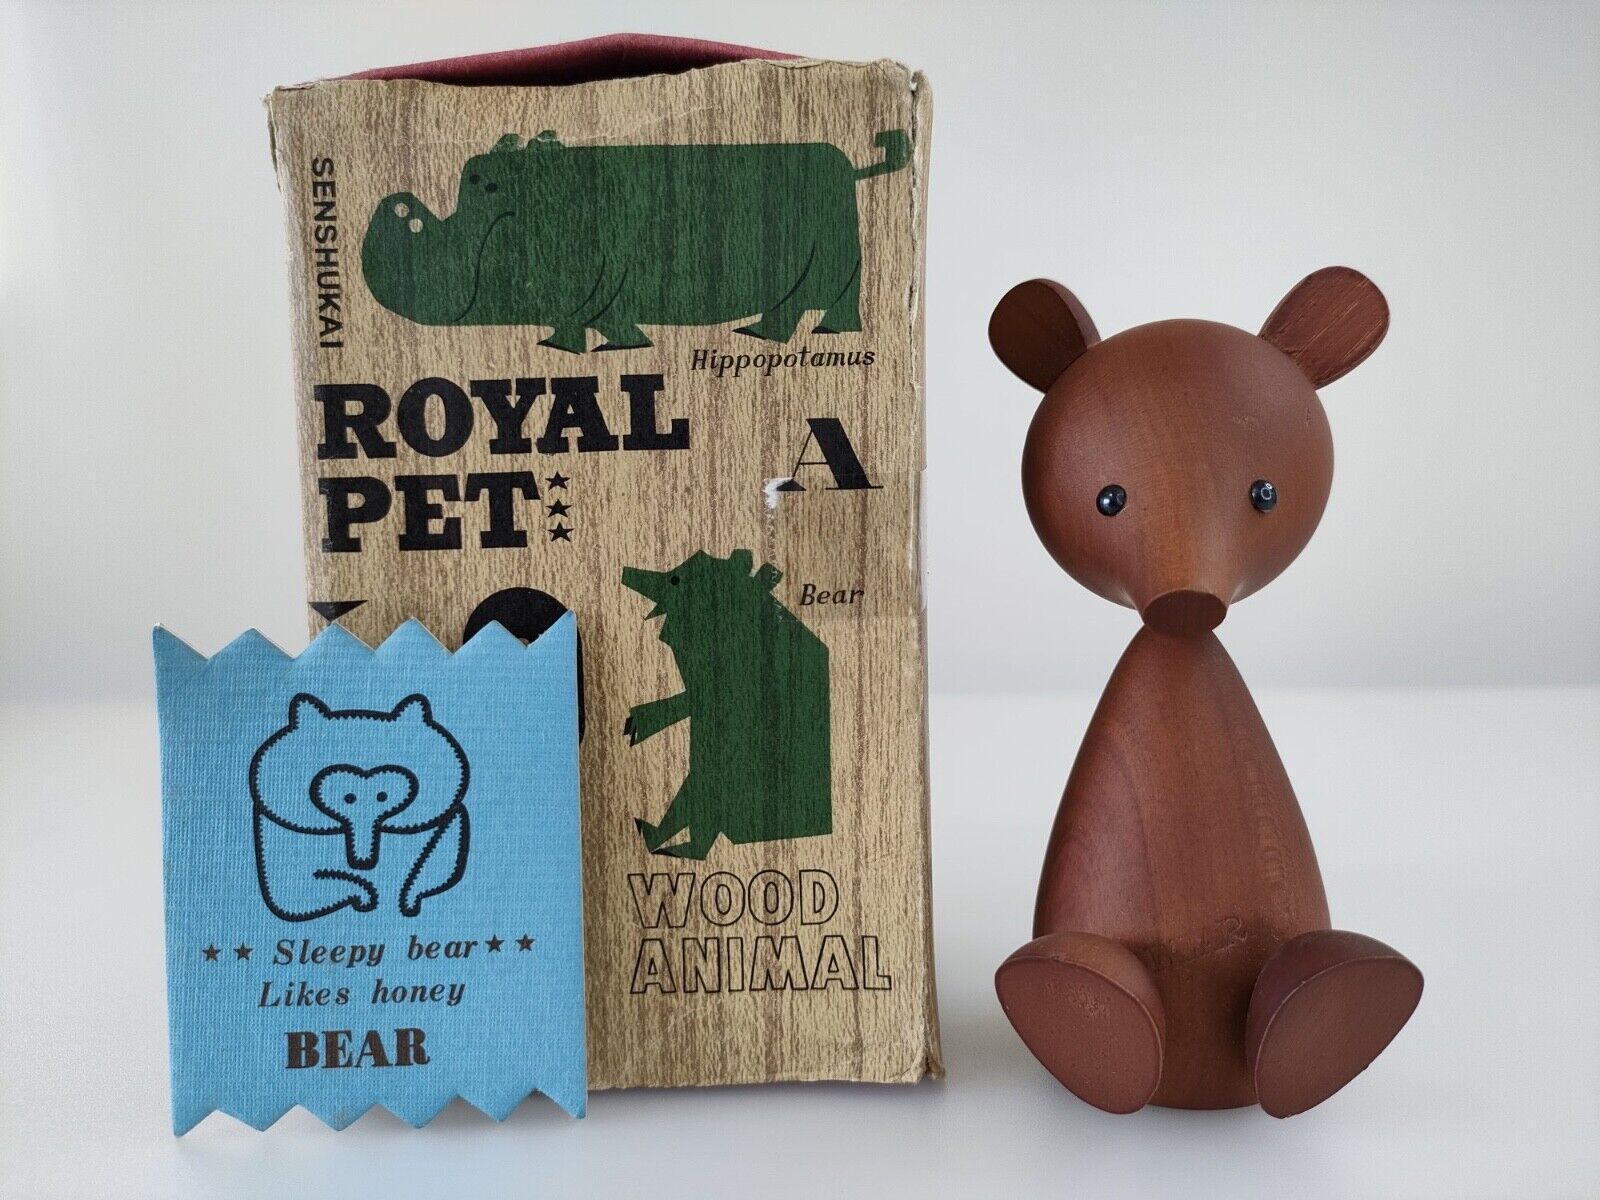 Senshukai Japanese vintage Wooden Animal Figurine Bear with Original Box